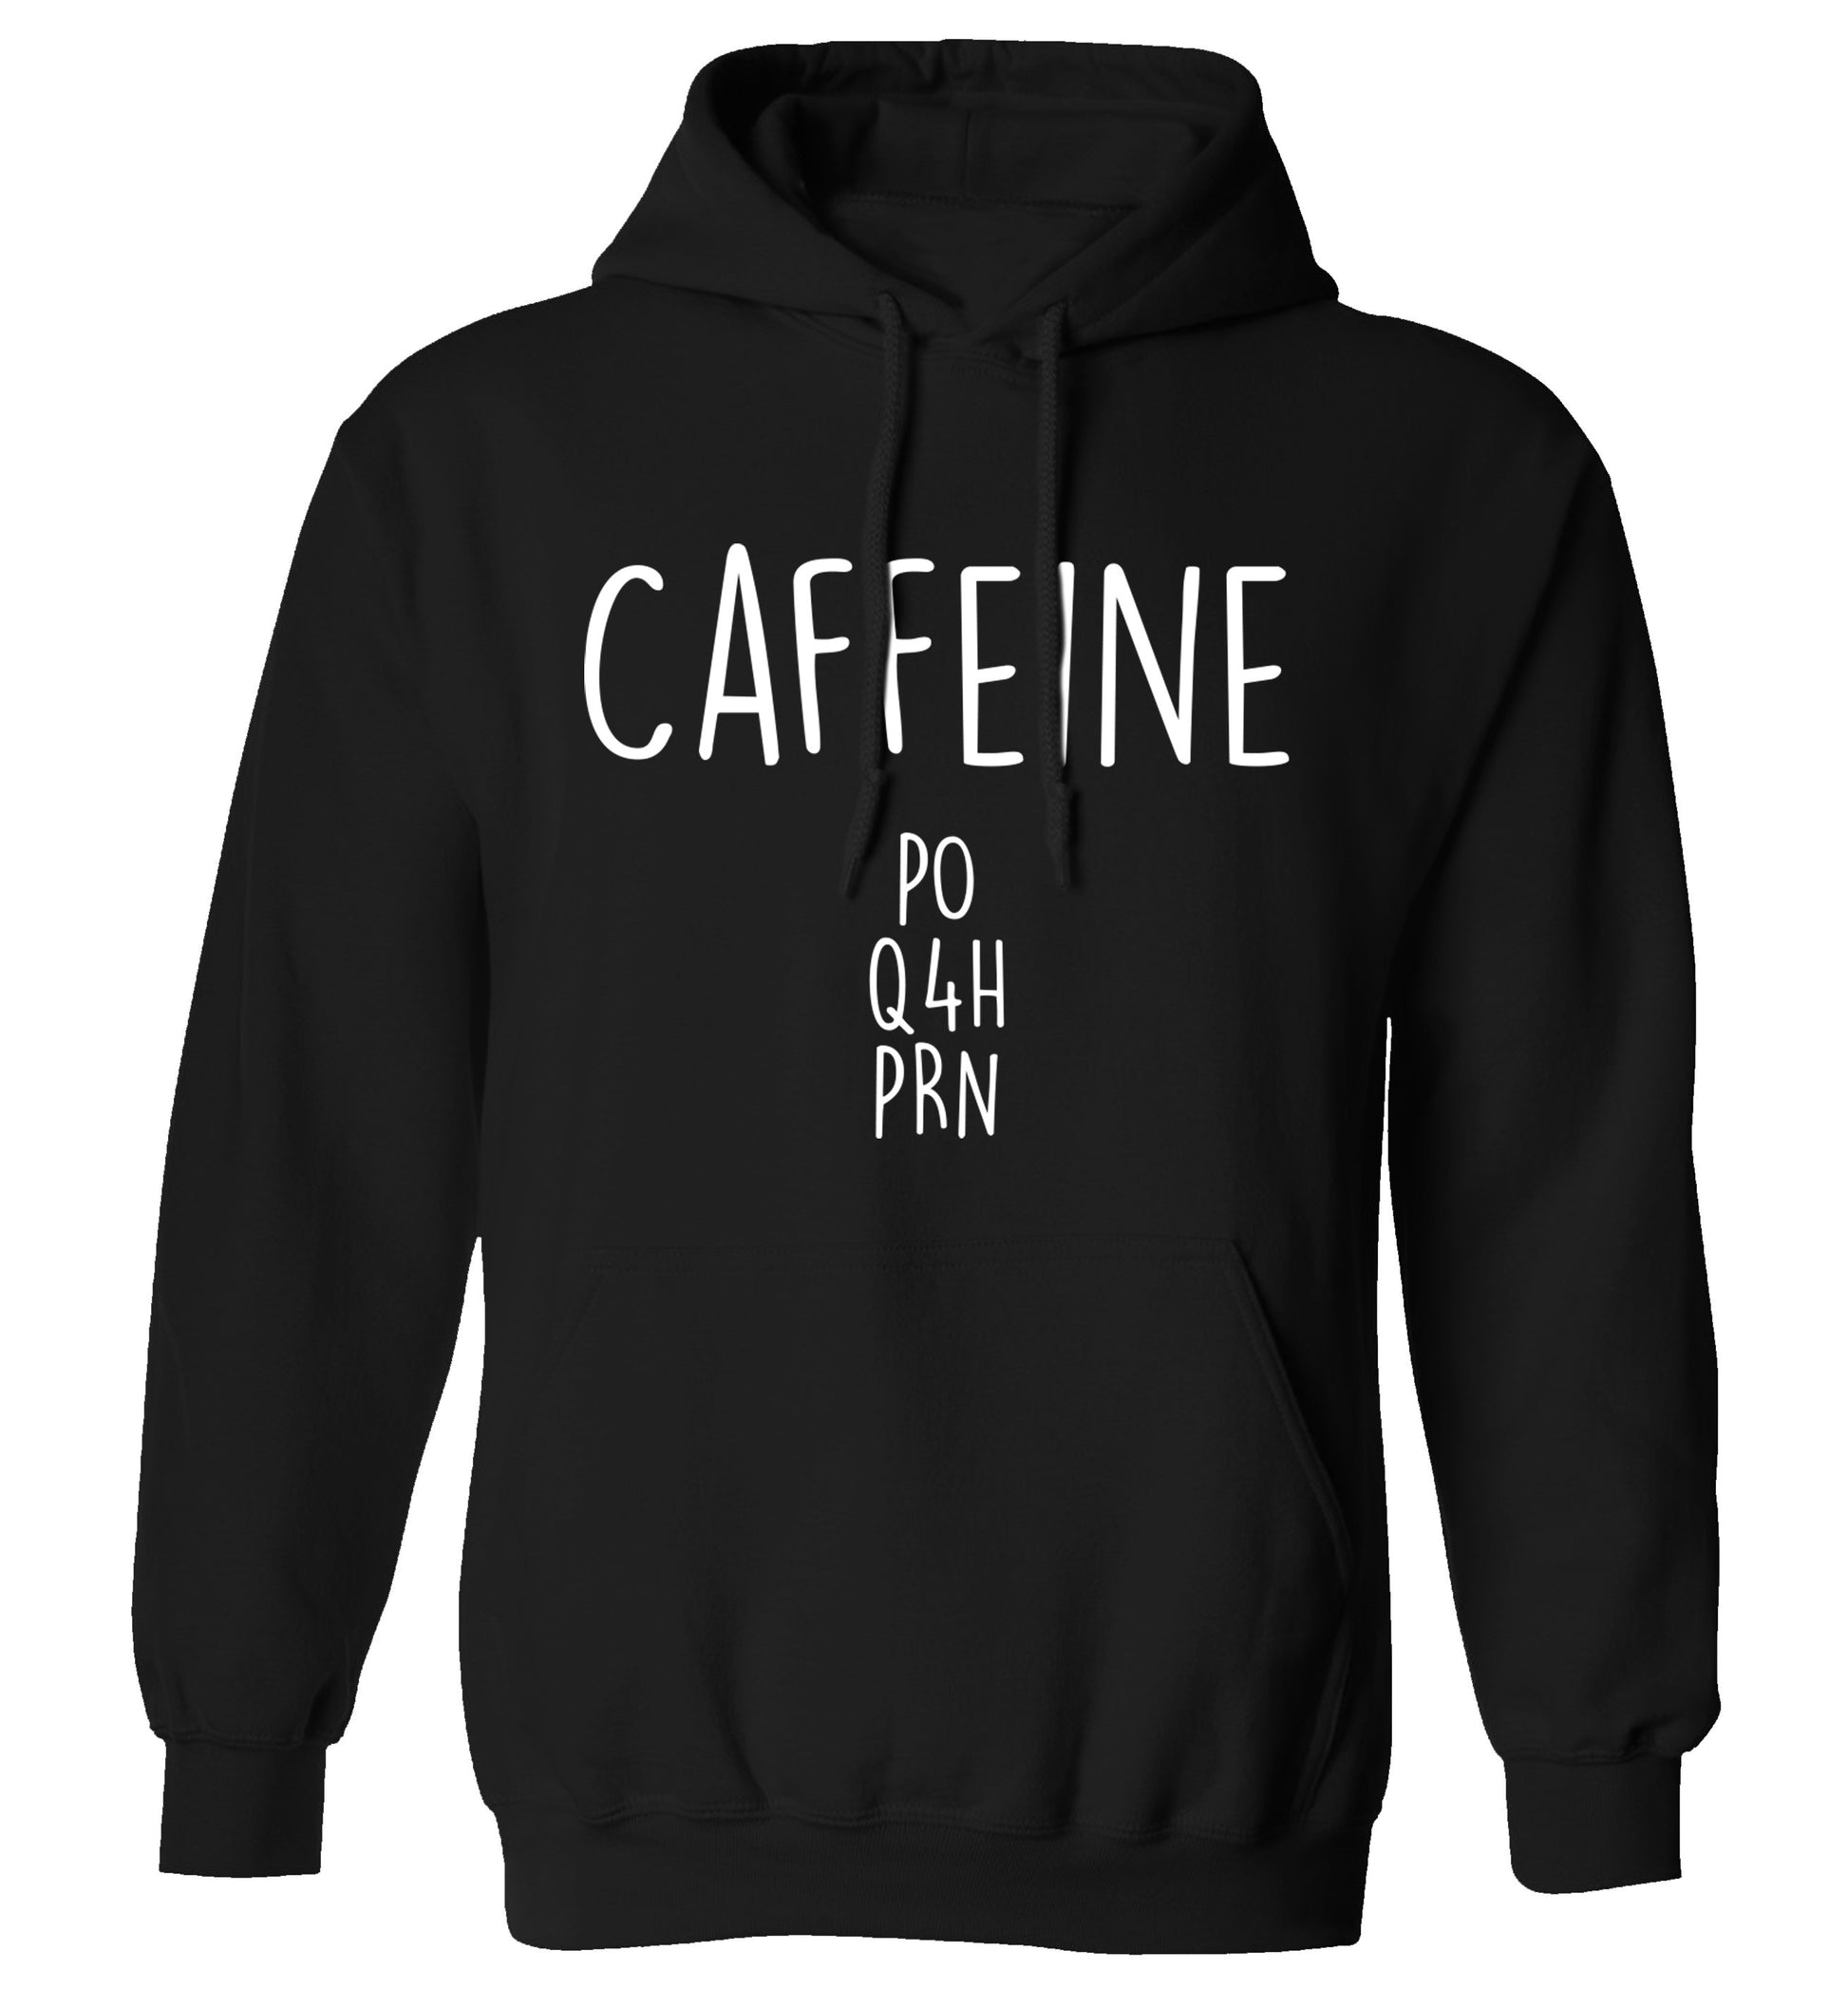 Caffeine PO Q4H PRN adults unisex black hoodie 2XL